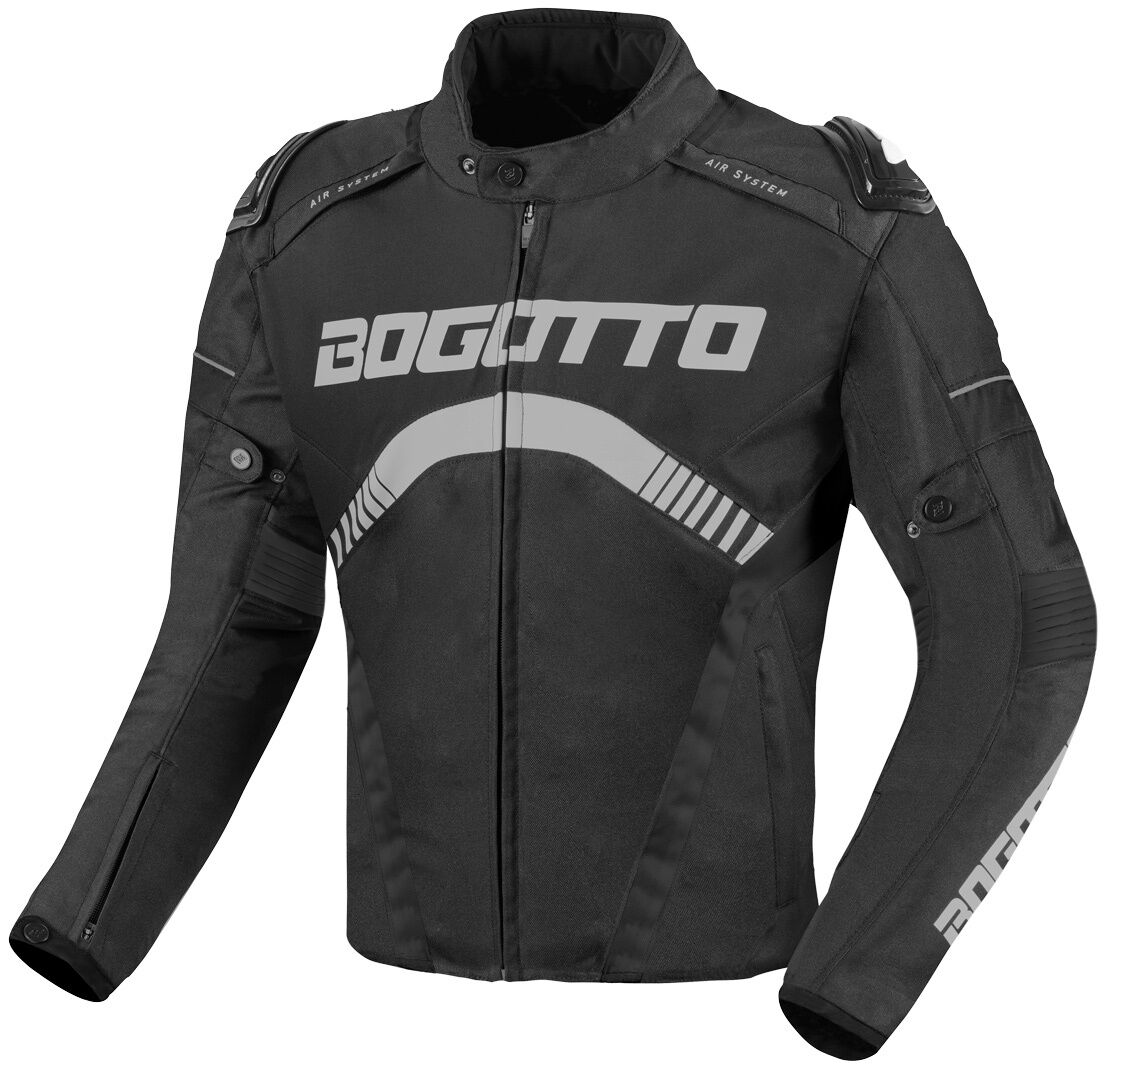 Bogotto Boomerang Chaqueta textil impermeable para motocicleta - Negro Gris (XL)